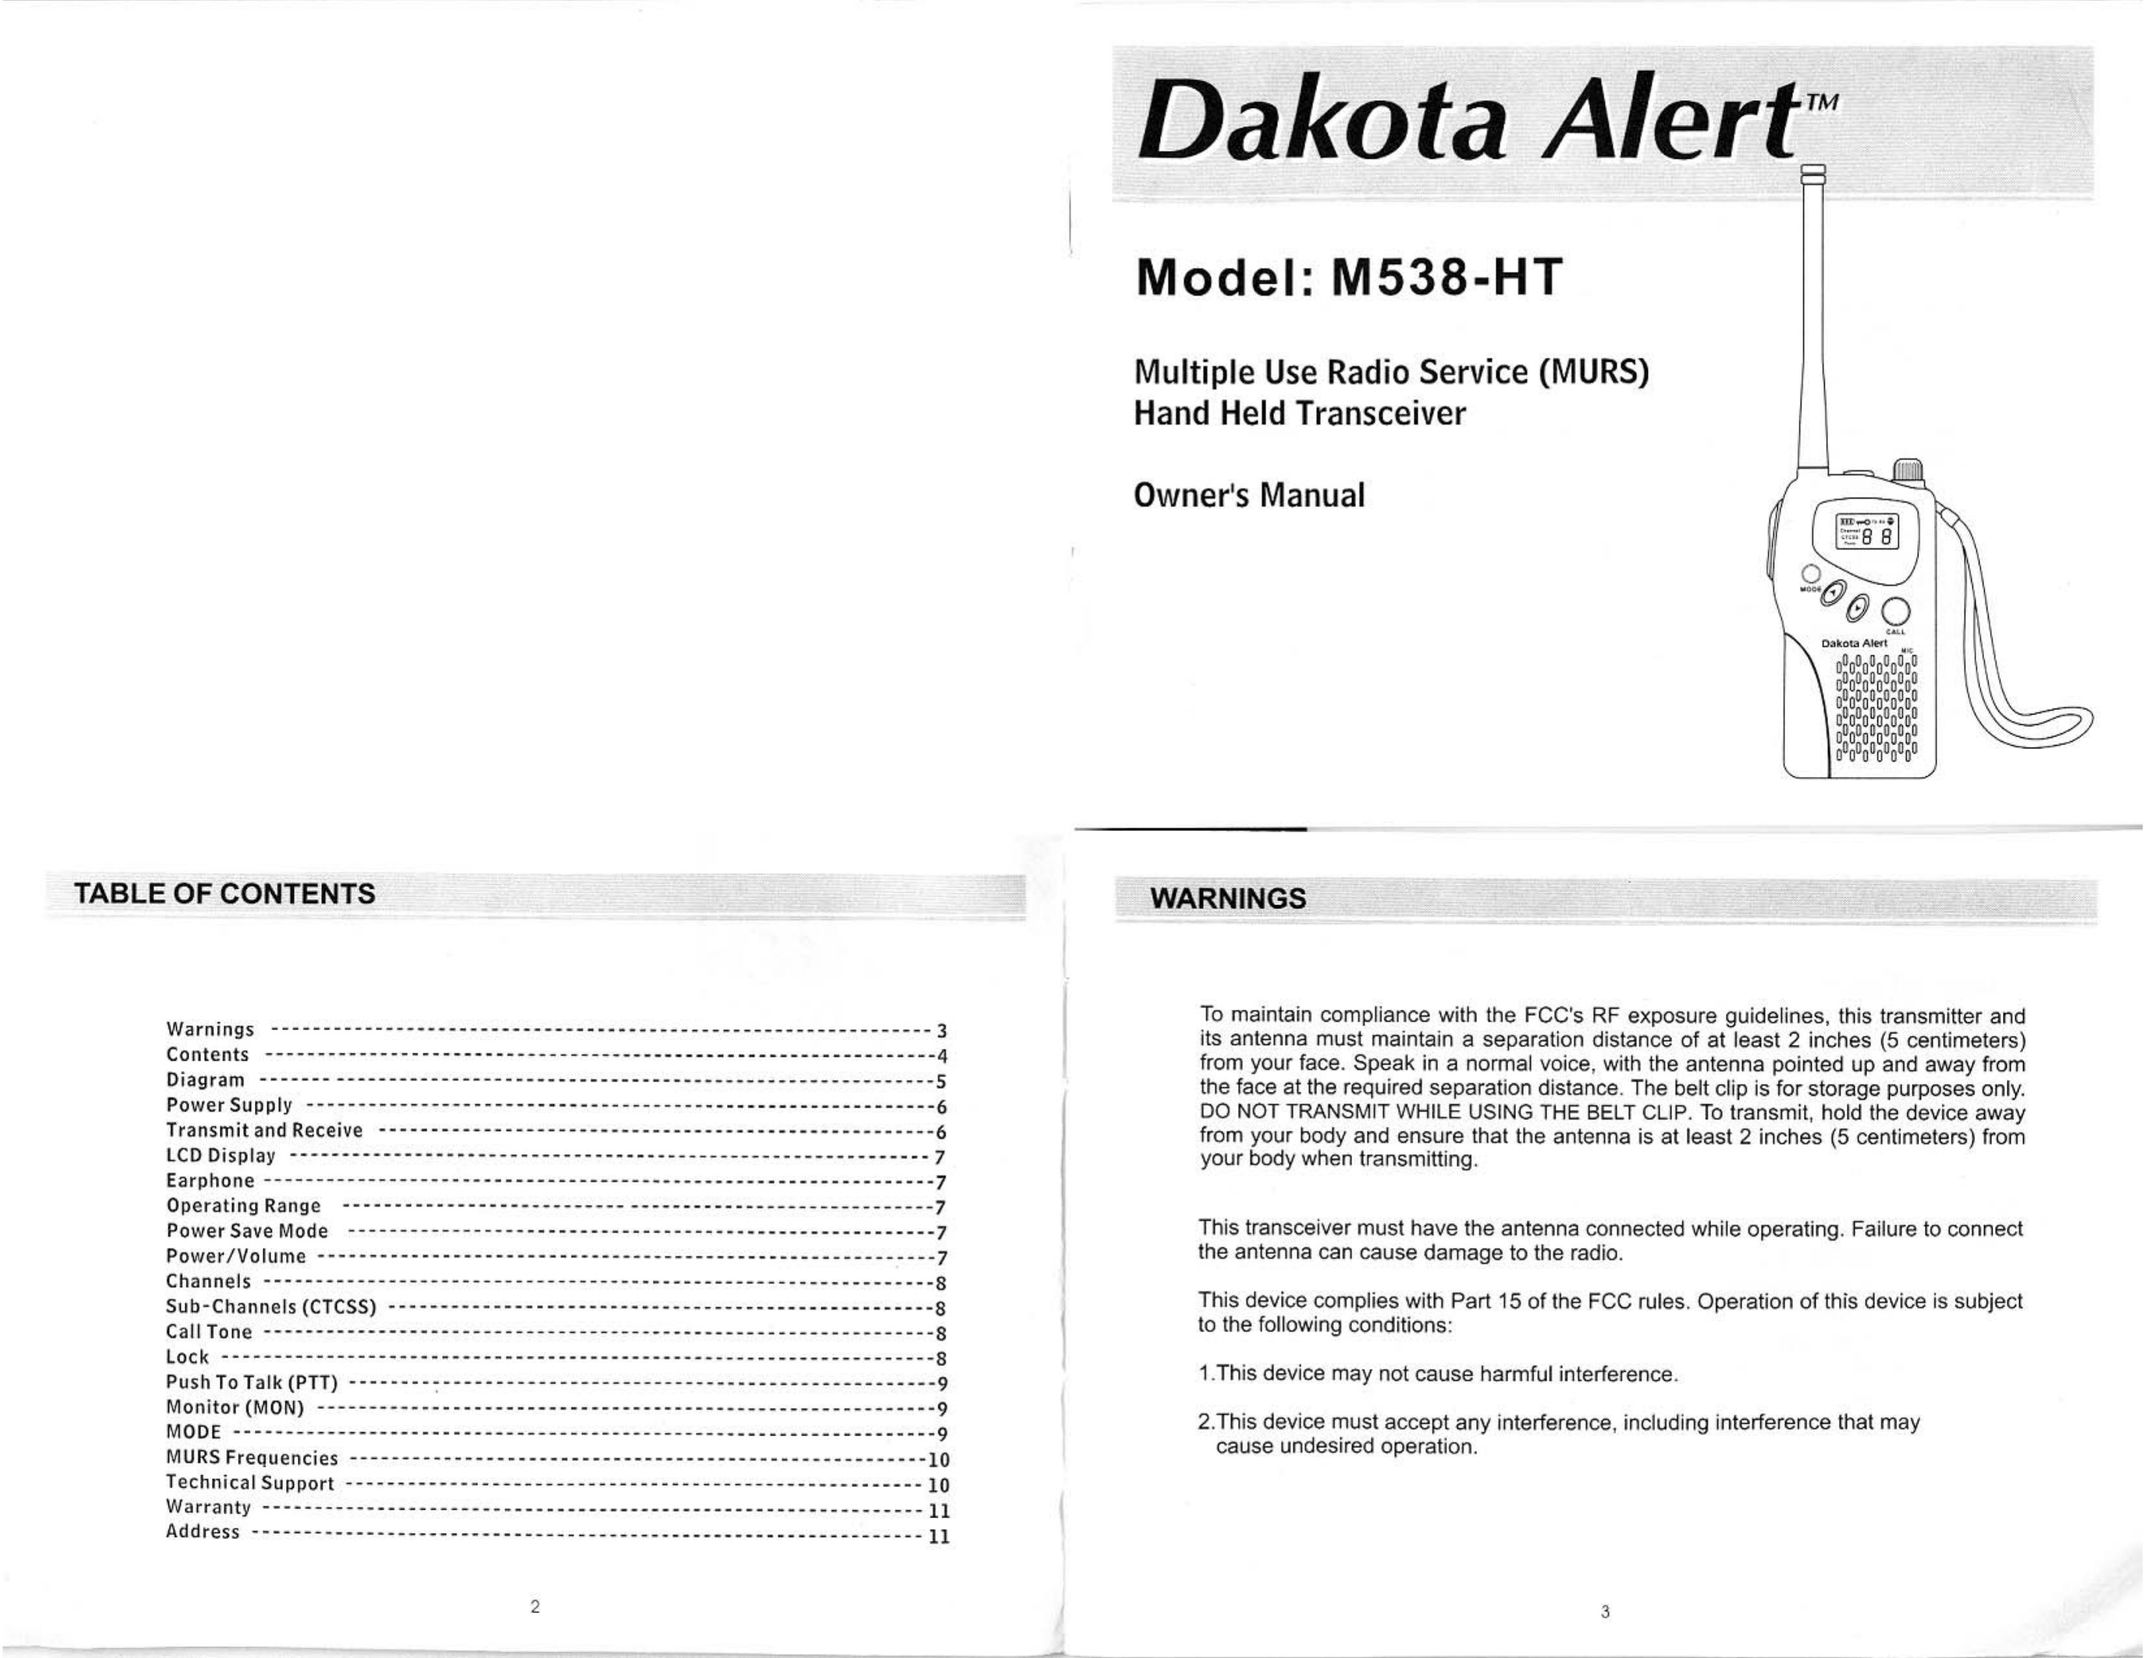 Dakota Alert M538-HT Portable Radio User Manual